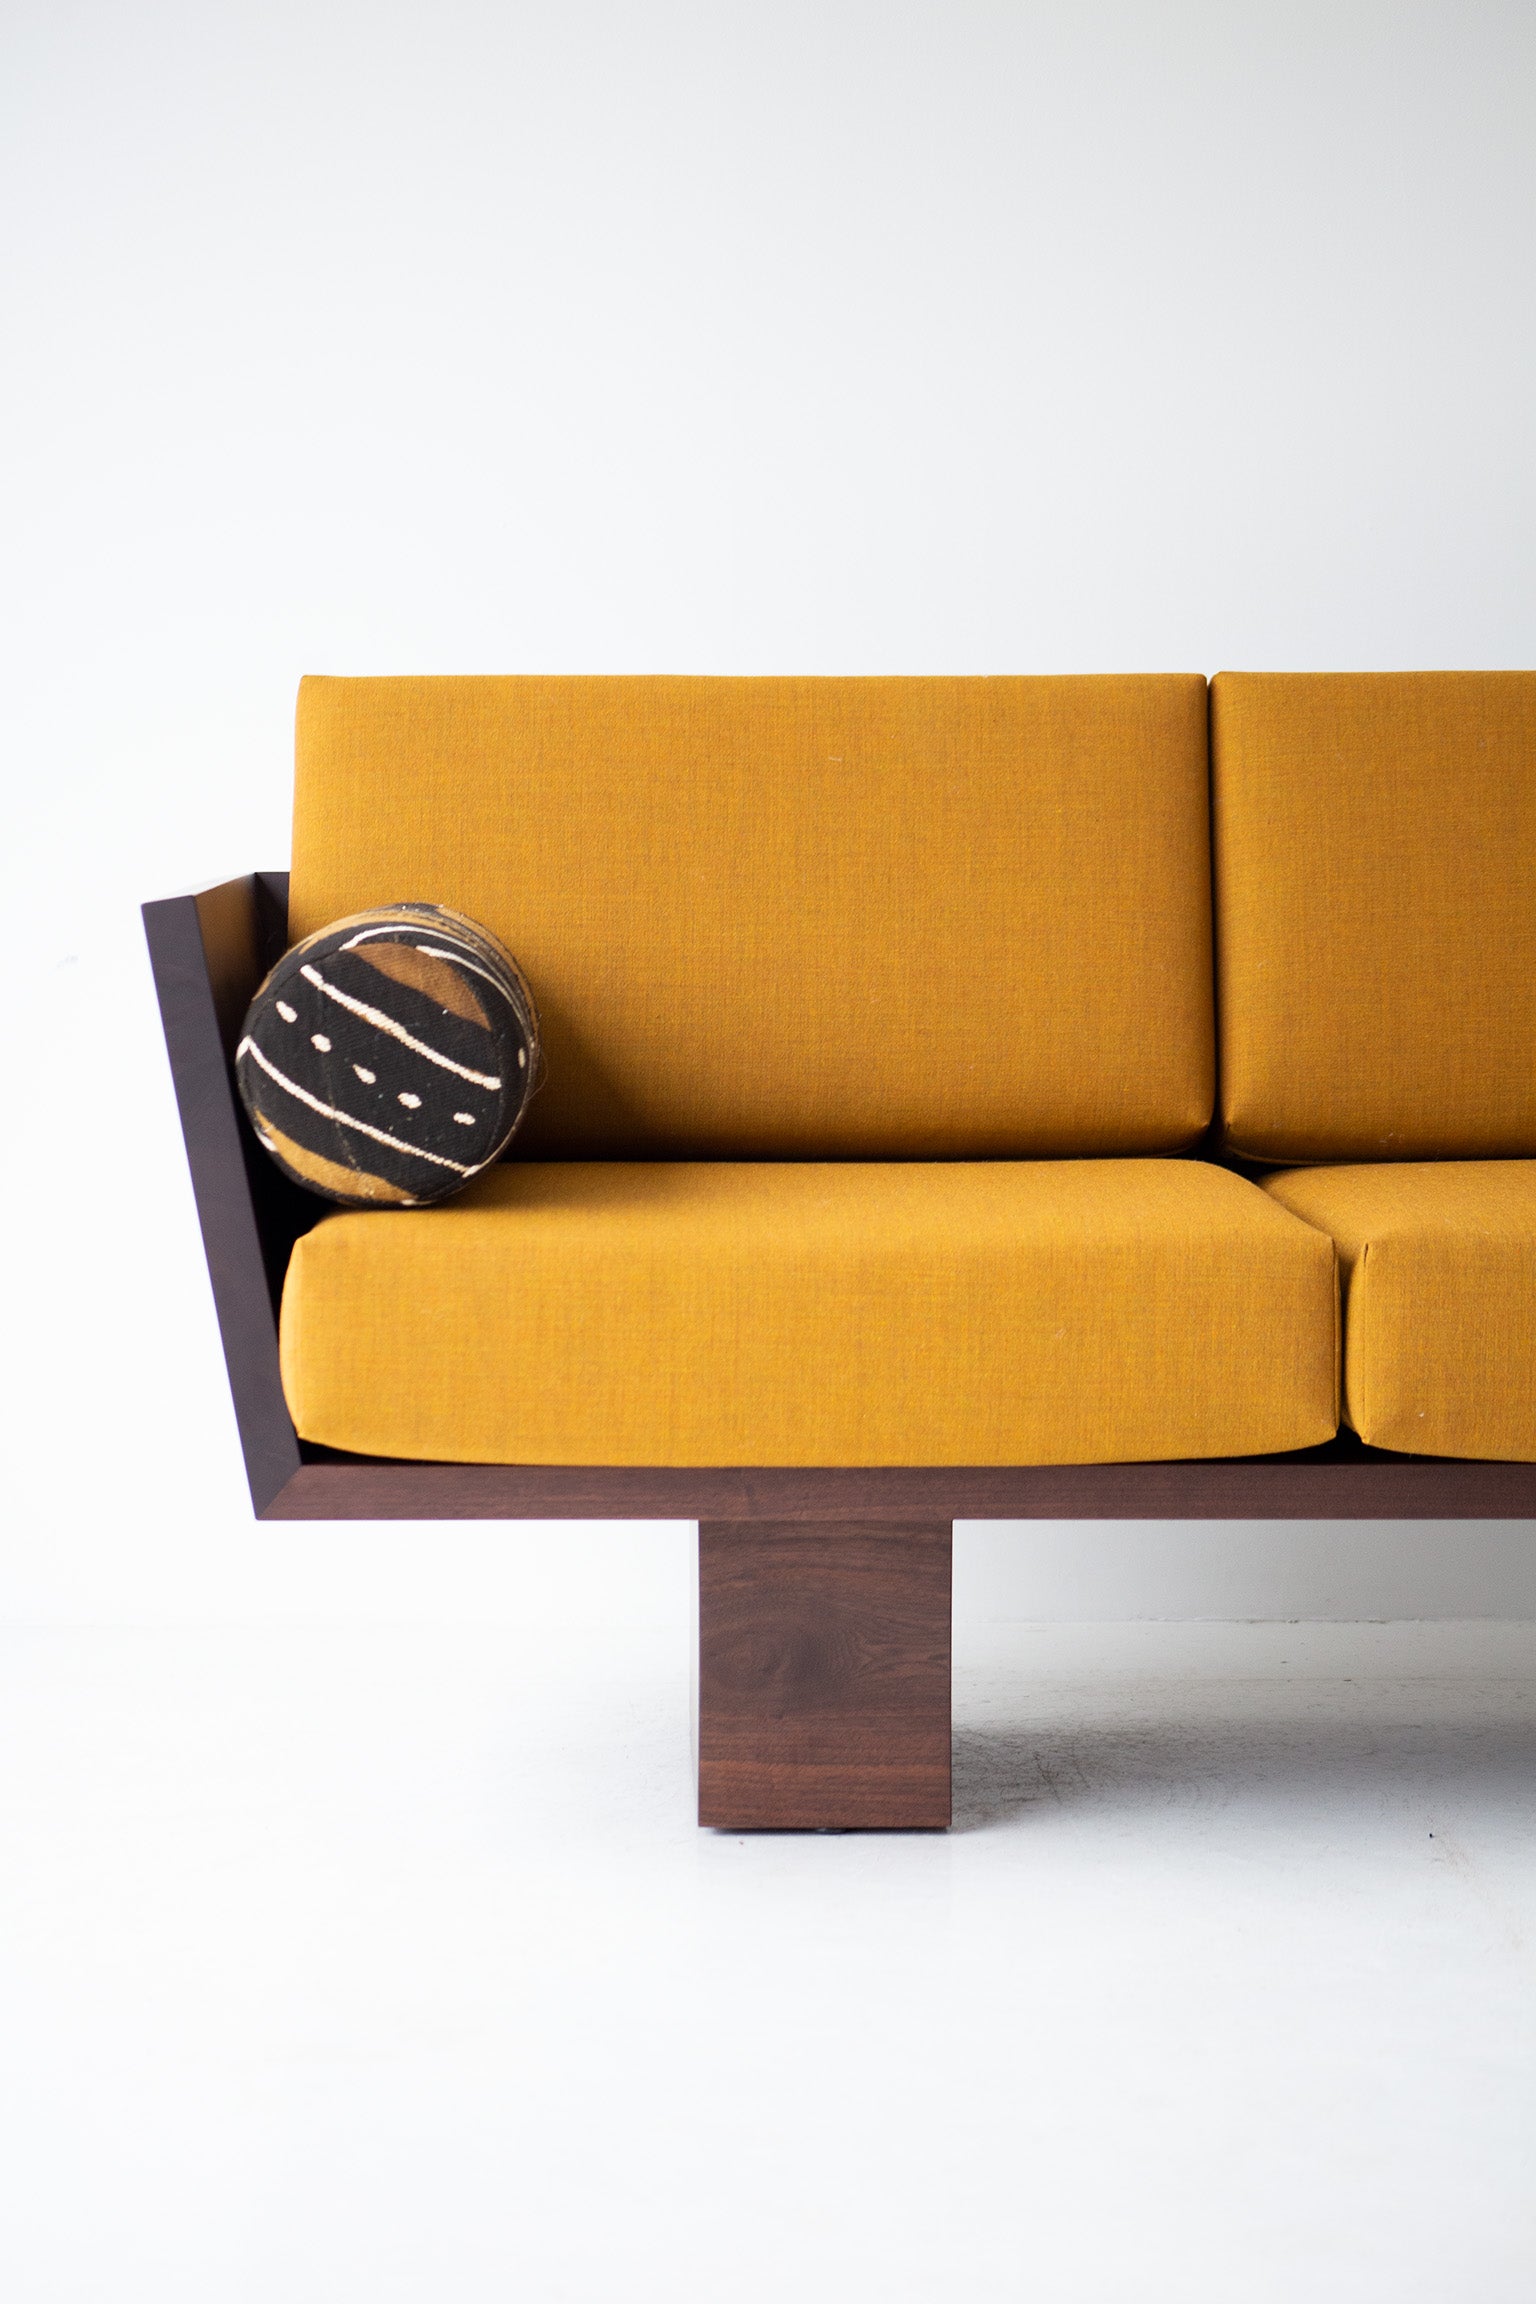 Modern Walnut Leather Sofa - The Suelo - 3022